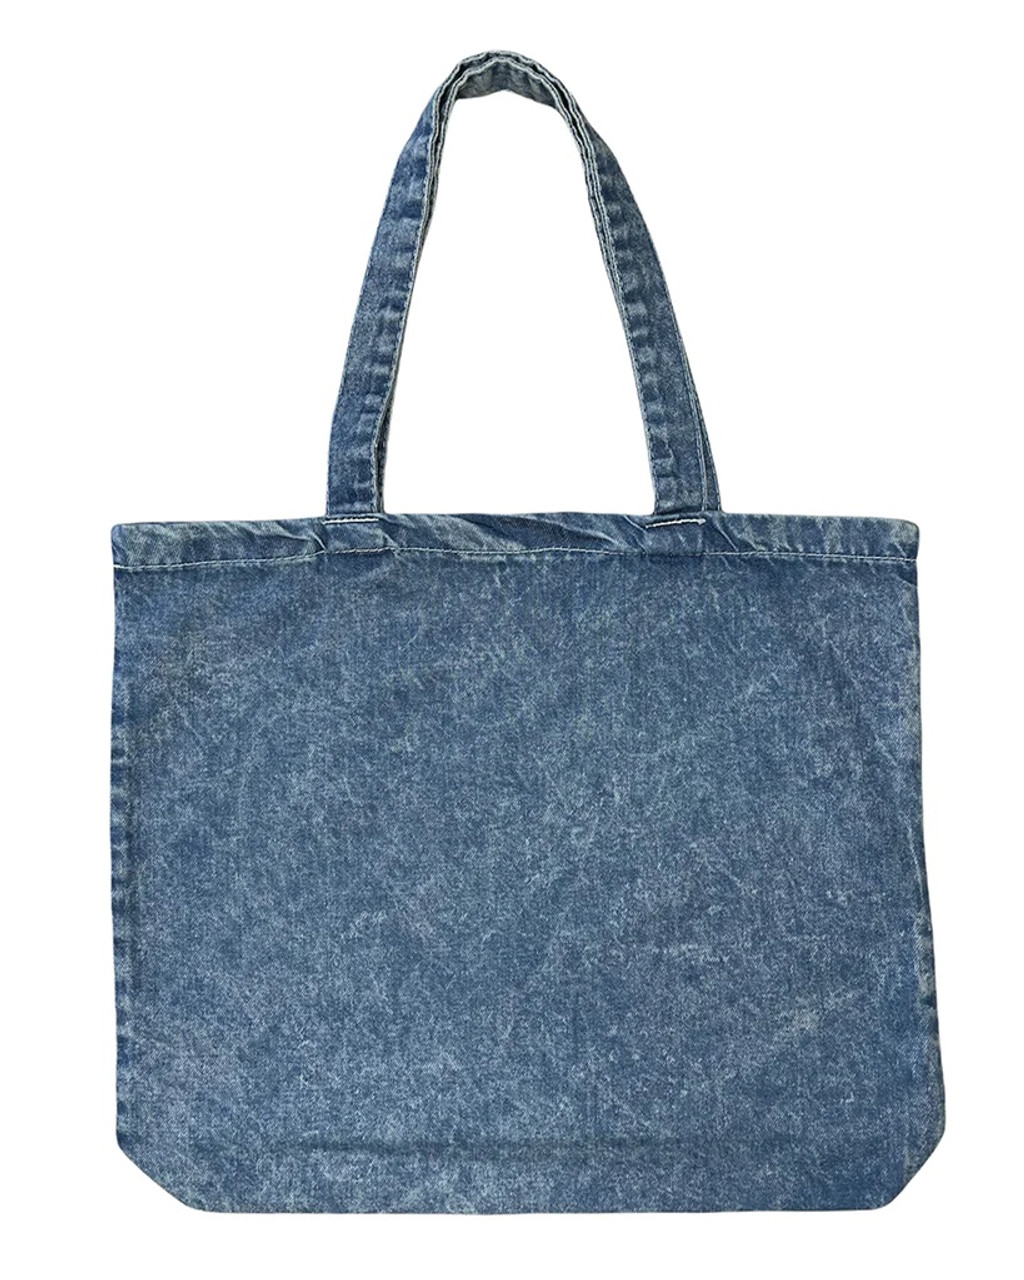 Wholesale Handbags: 131 Suppliers of Purses & Tote Bags | SaleHoo